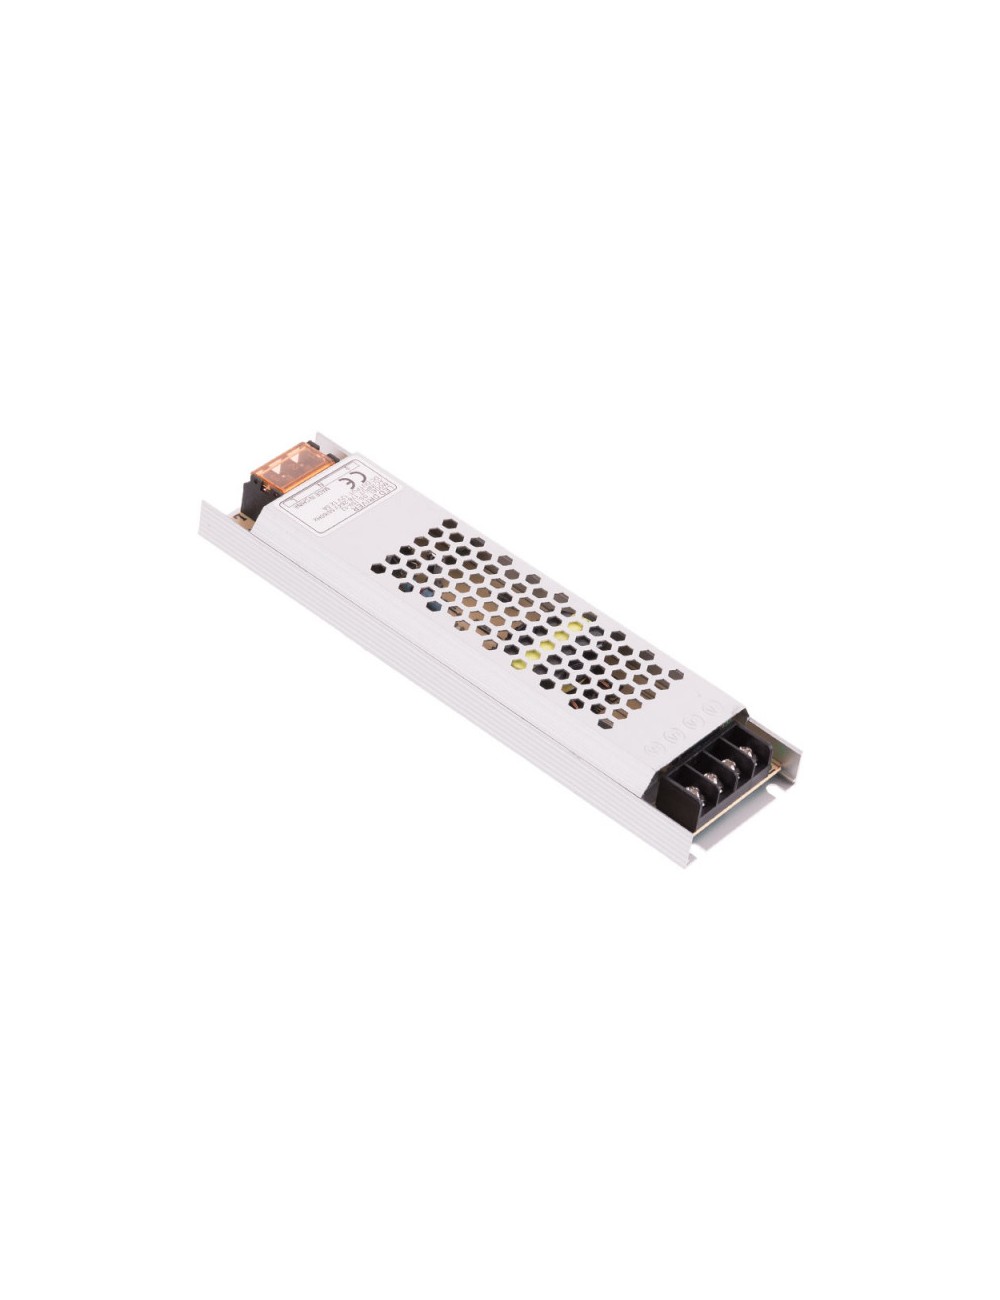 TransforCopainur LED Ultra Fin  150W 12VDC_110V-220V/AC IP21 [CP-150-12_220 IP21]